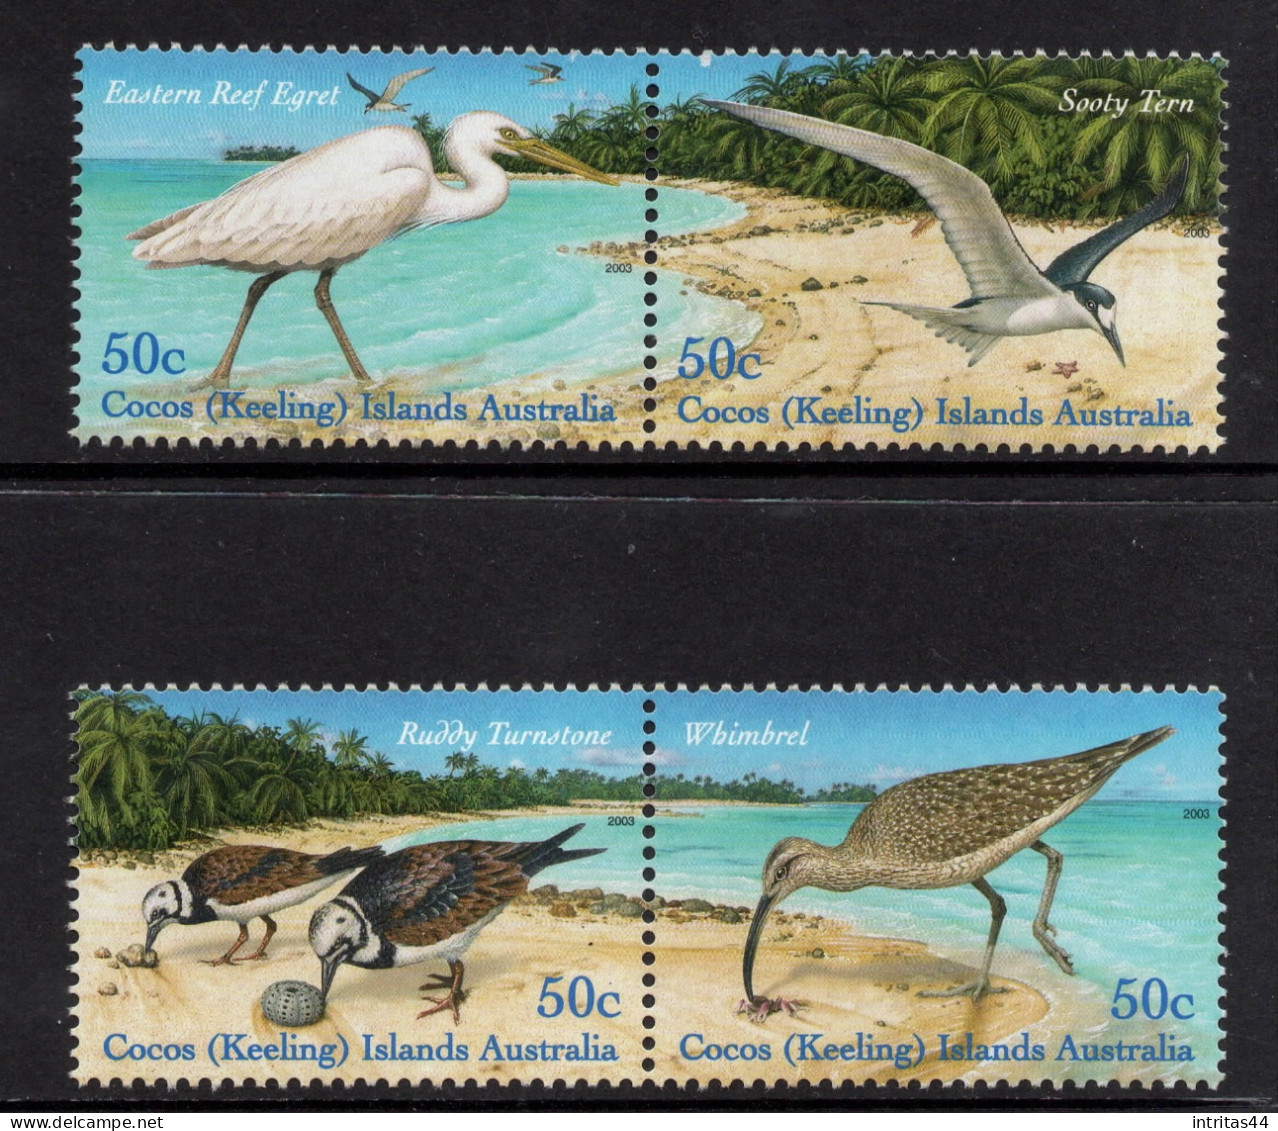 COCOS(keeling)ISLANDS 2003 " SHORELINE BIRDS " SET MNH - Kokosinseln (Keeling Islands)